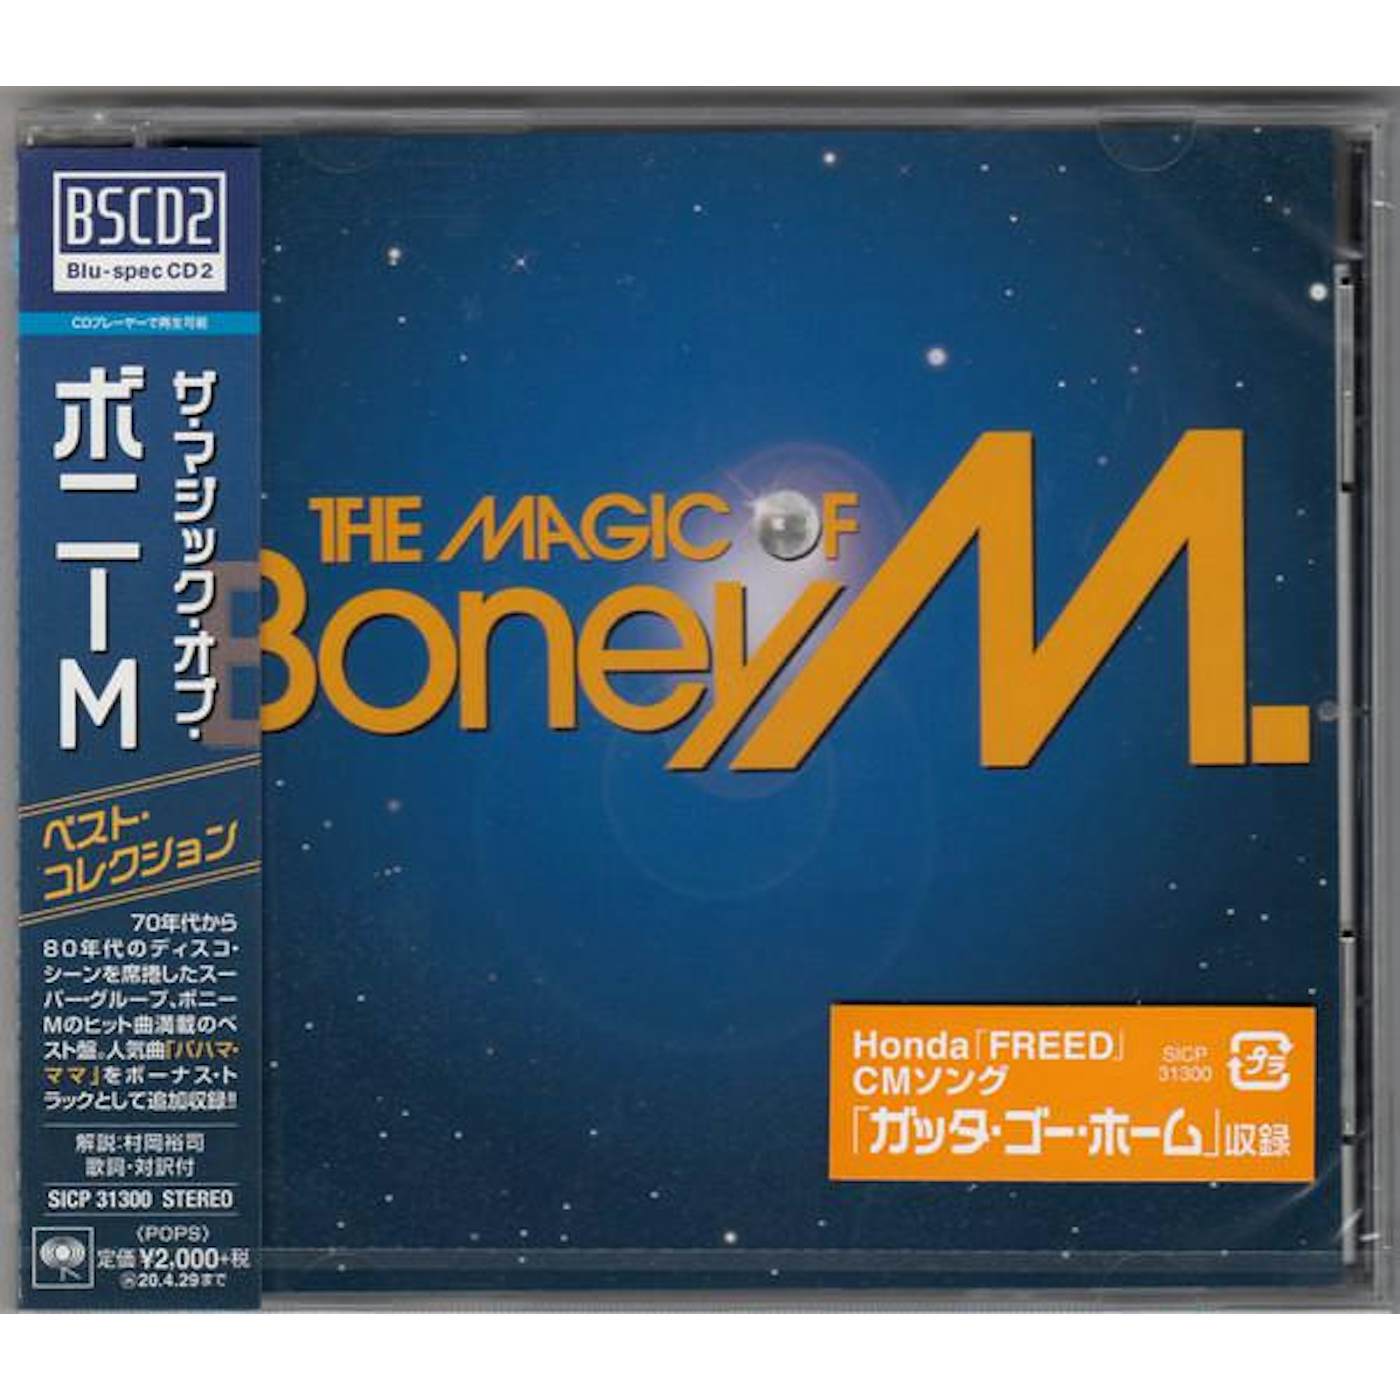 MAGIC OF Boney M. CD